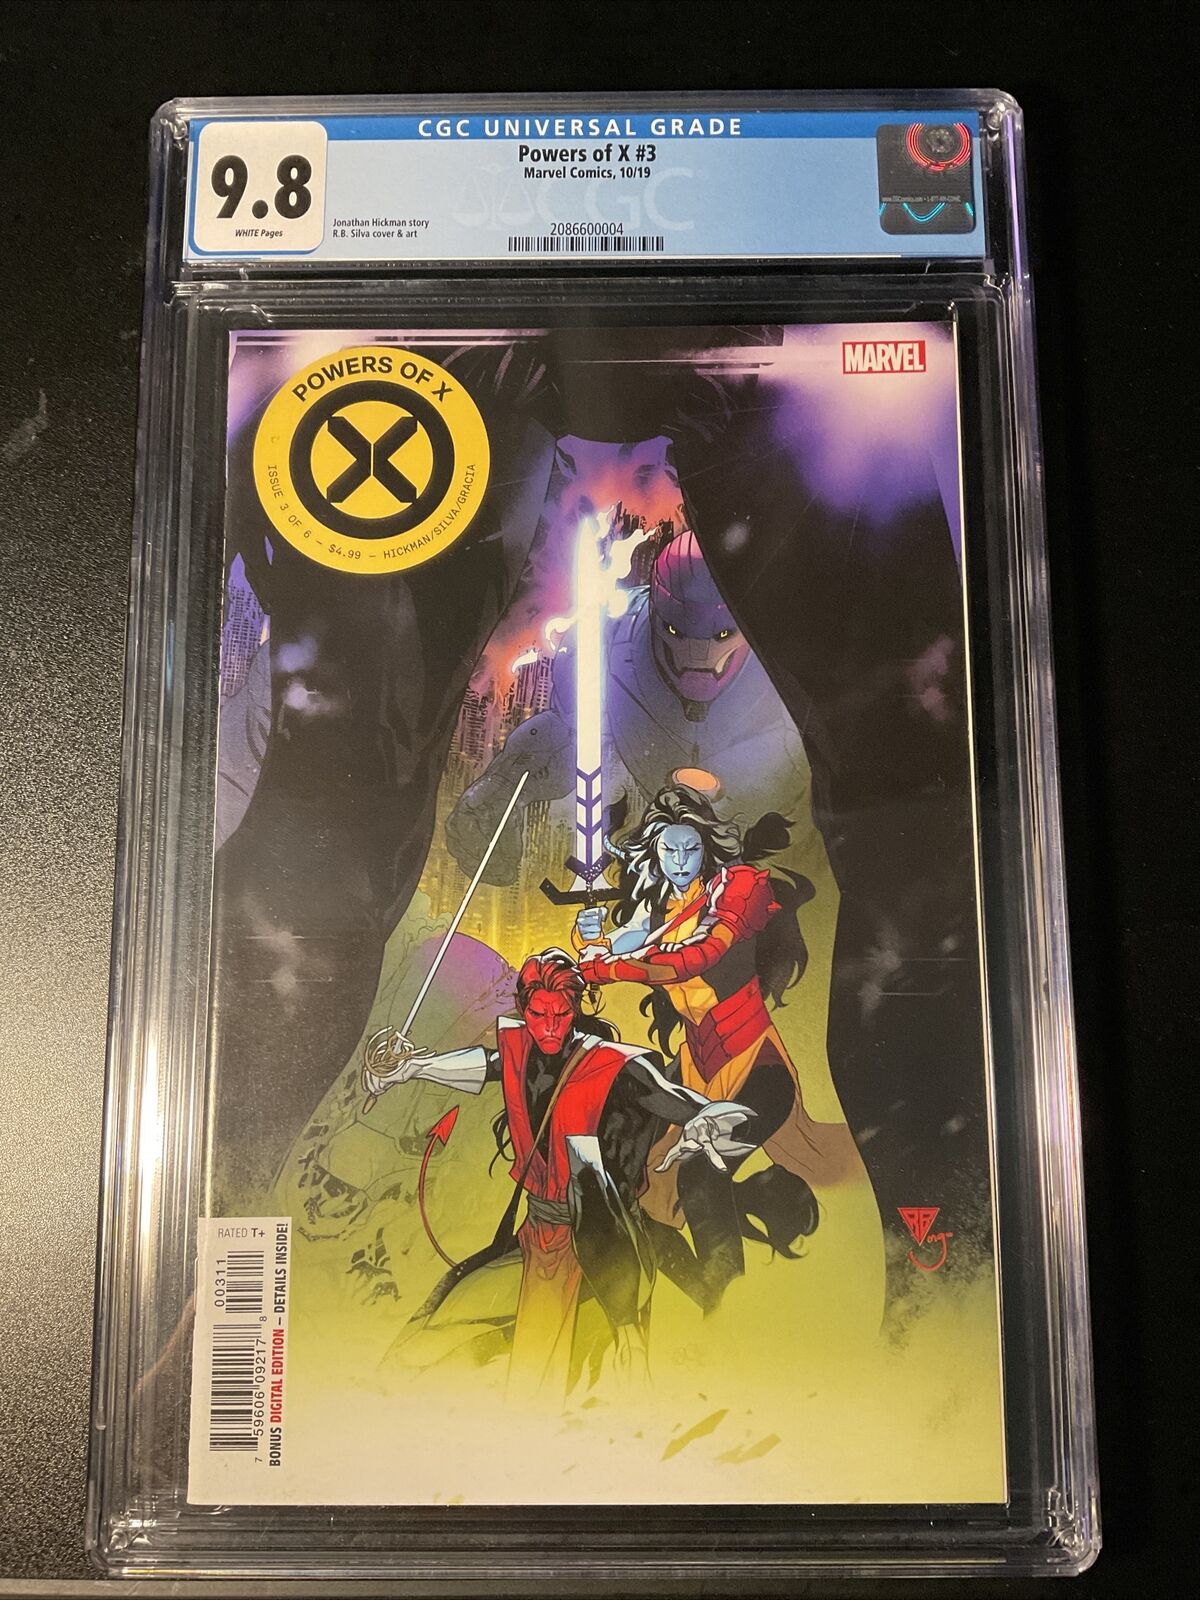 X-MEN Power of X 3 CGC 9.8 - Silva Secret Variant Cover - 2019